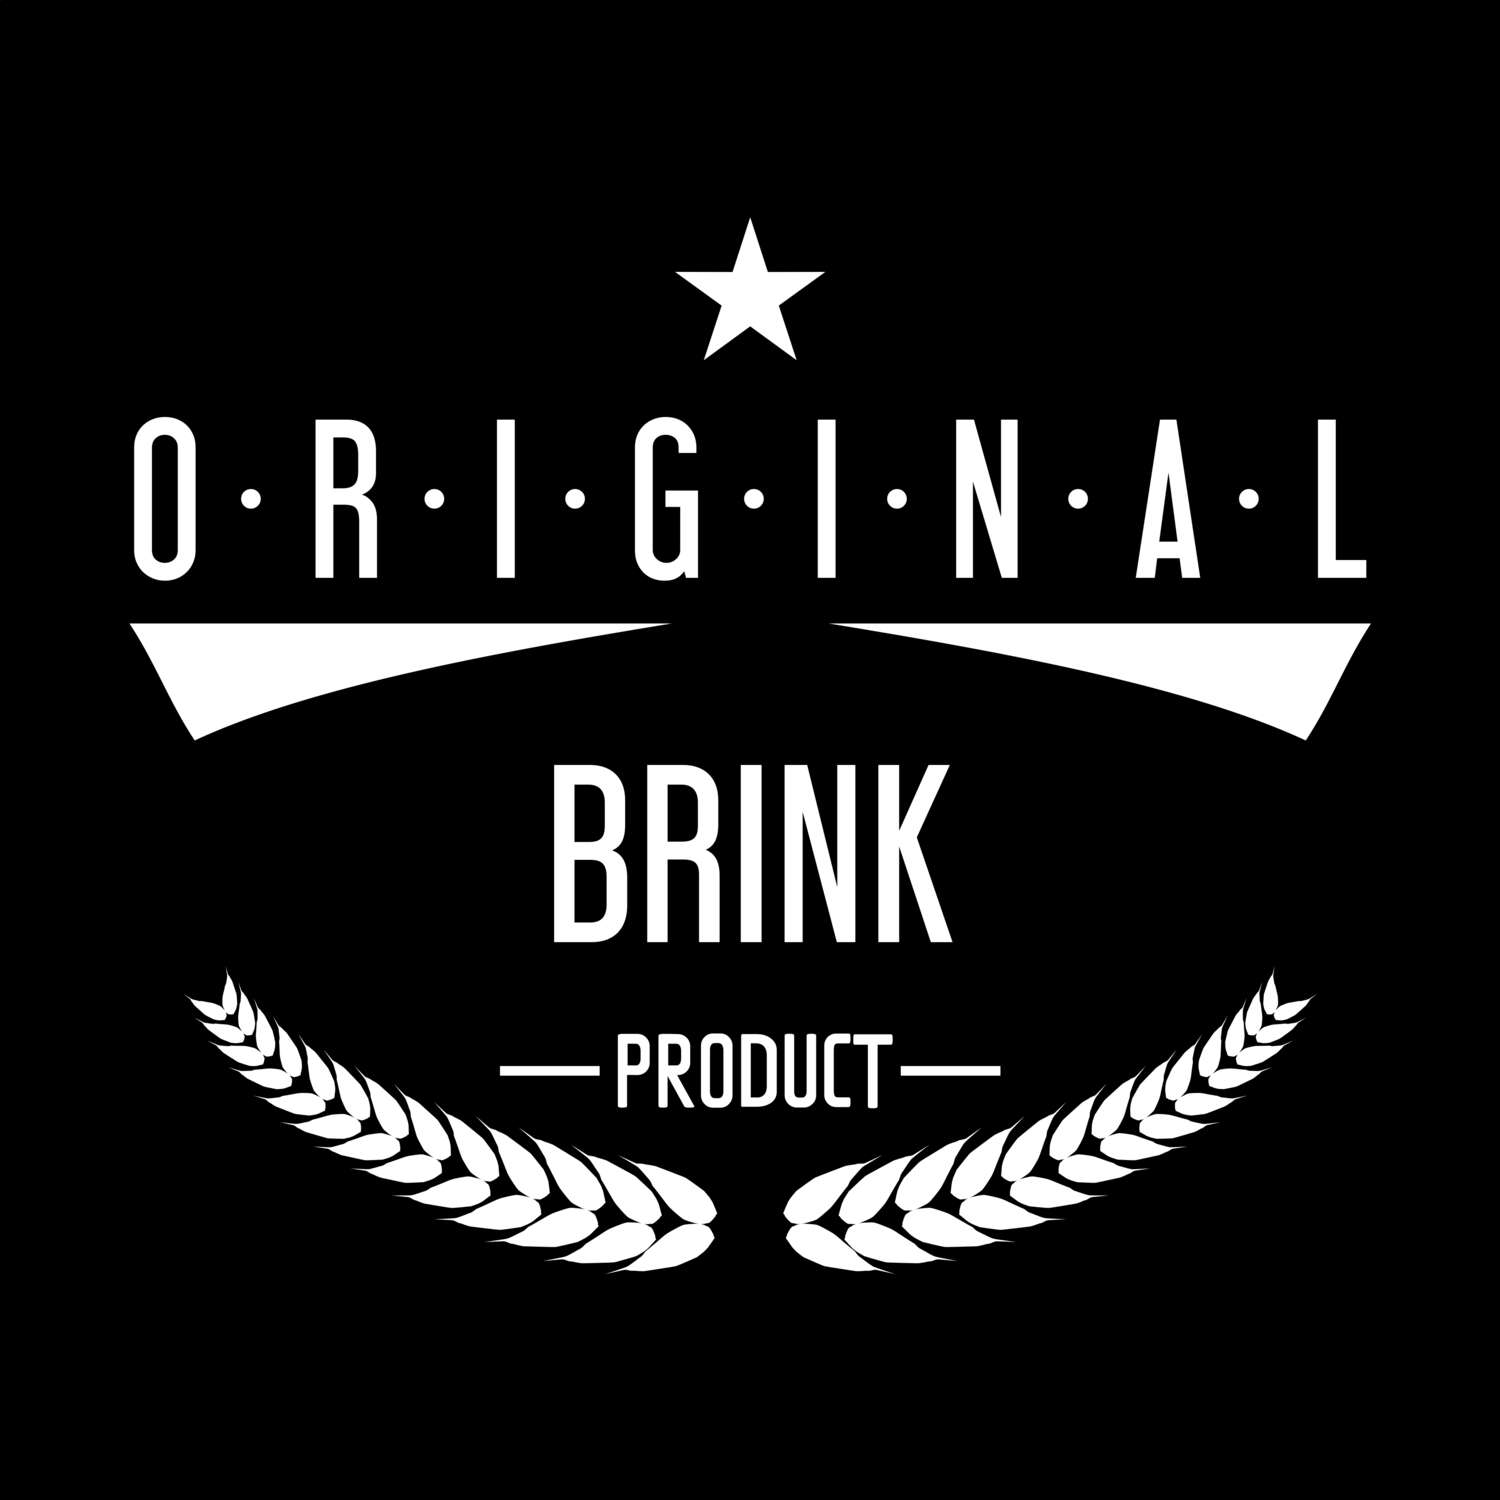 Brink T-Shirt »Original Product«